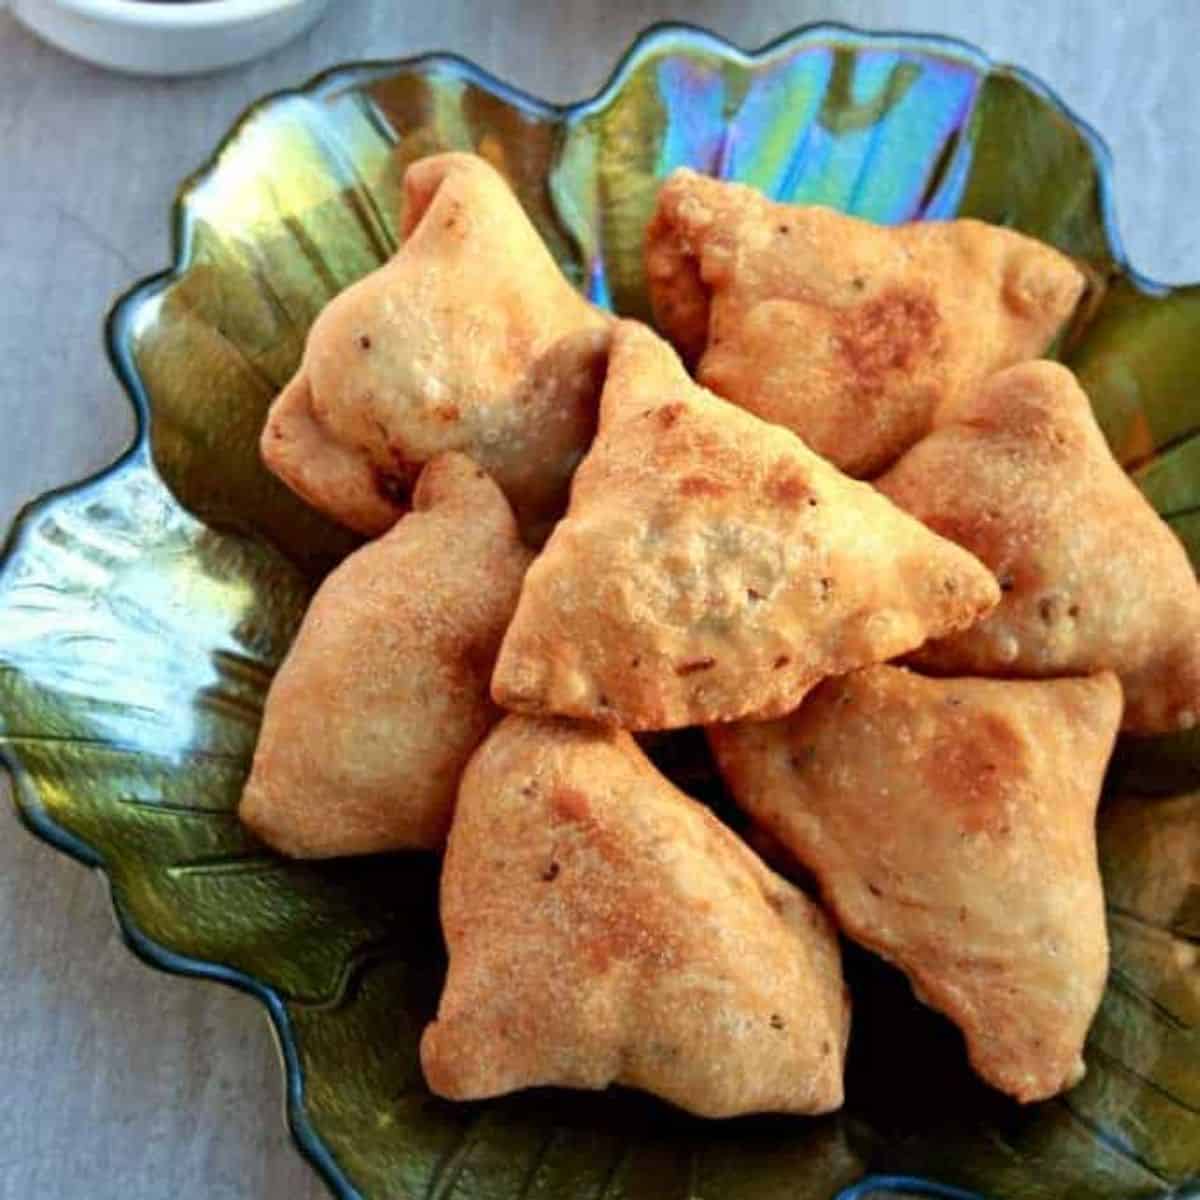 Vegetarian Aloo samosa or samosas. Indian special traditional